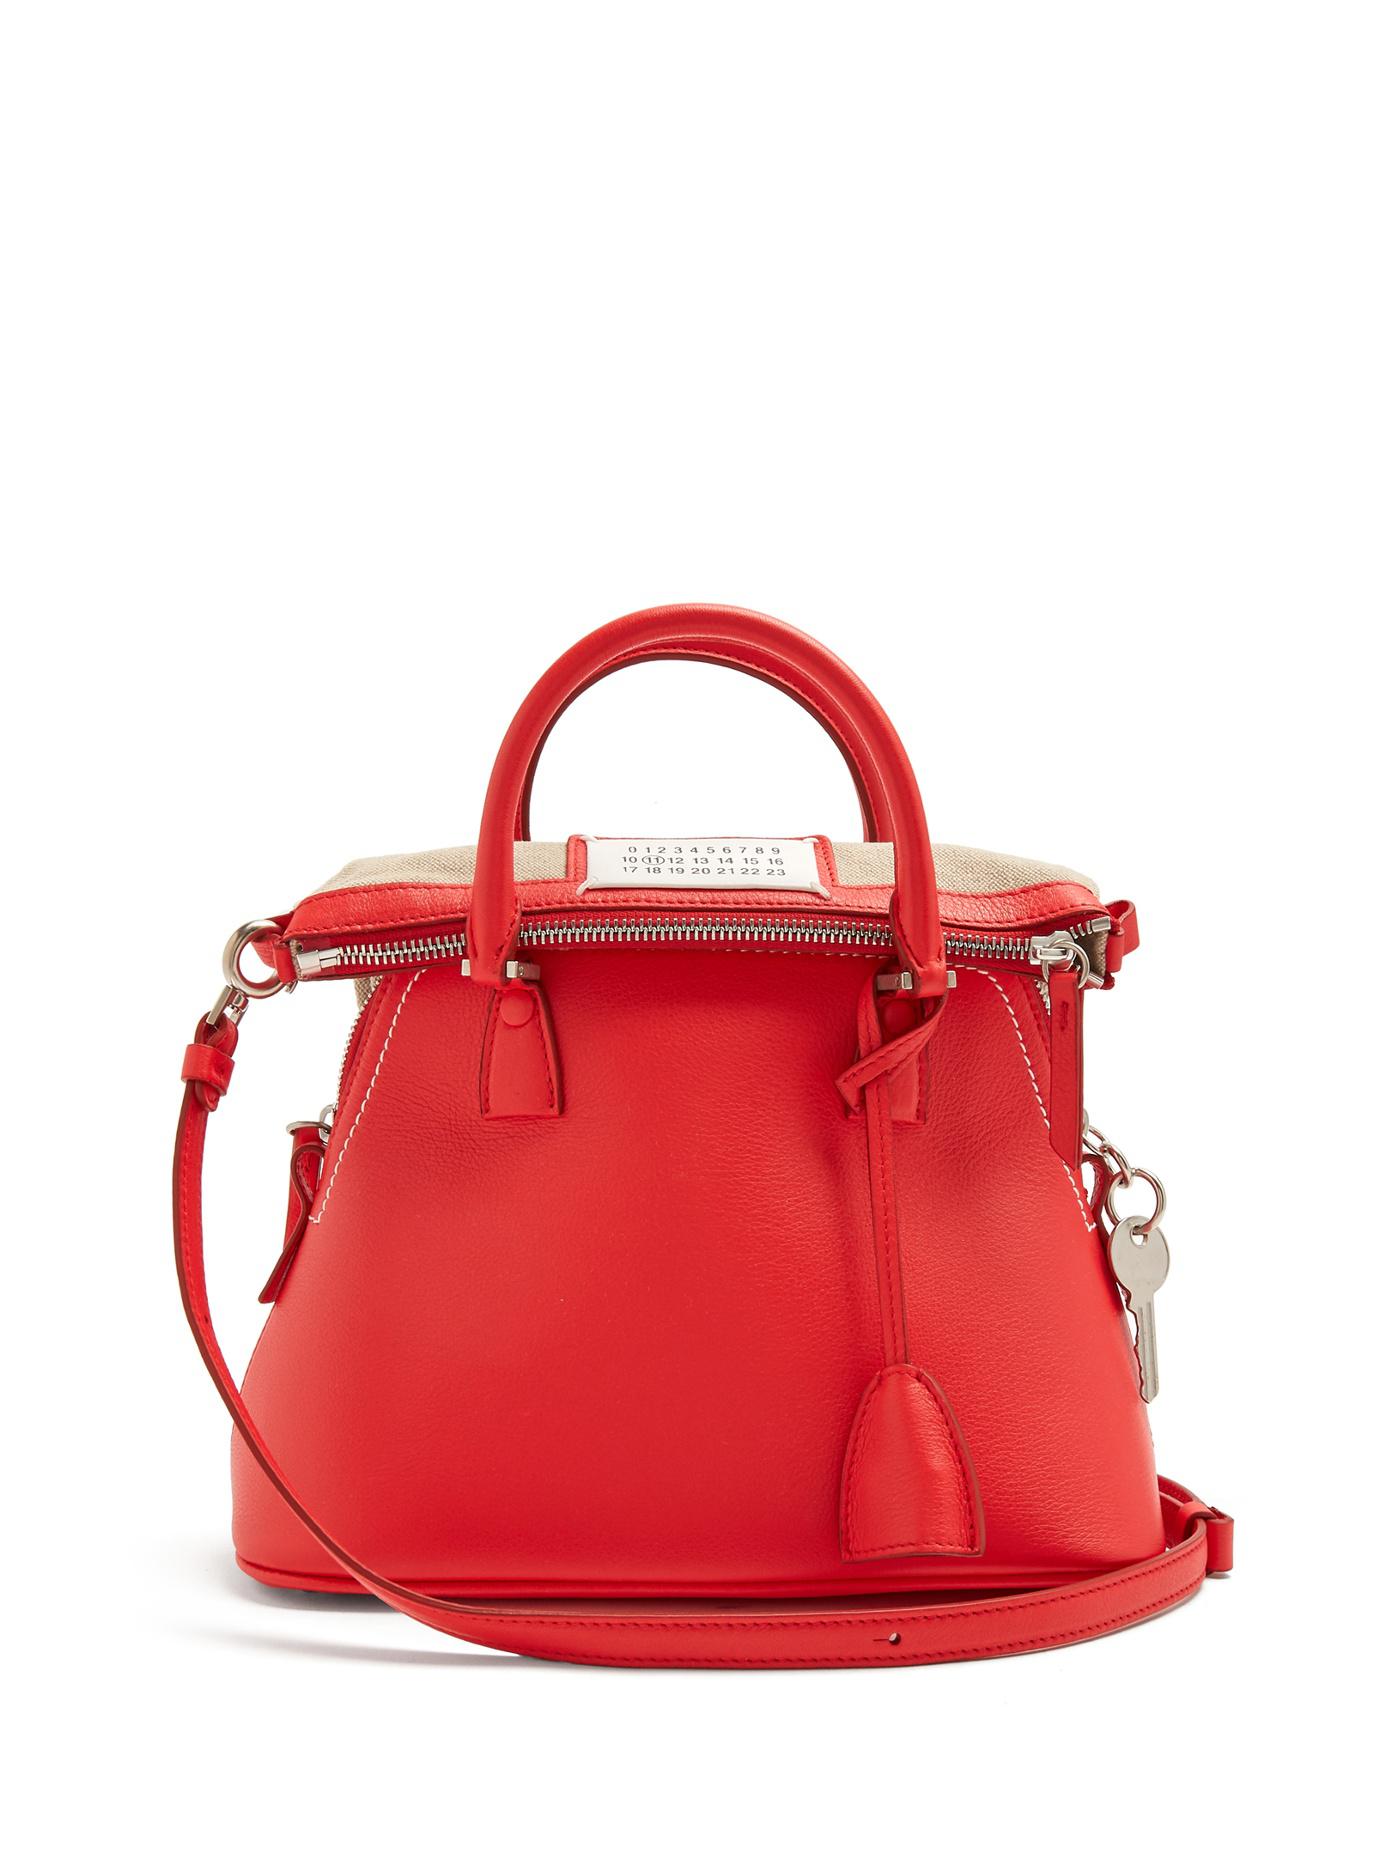 Maison Margiela 5ac Mini Leather Bag in Red - Lyst